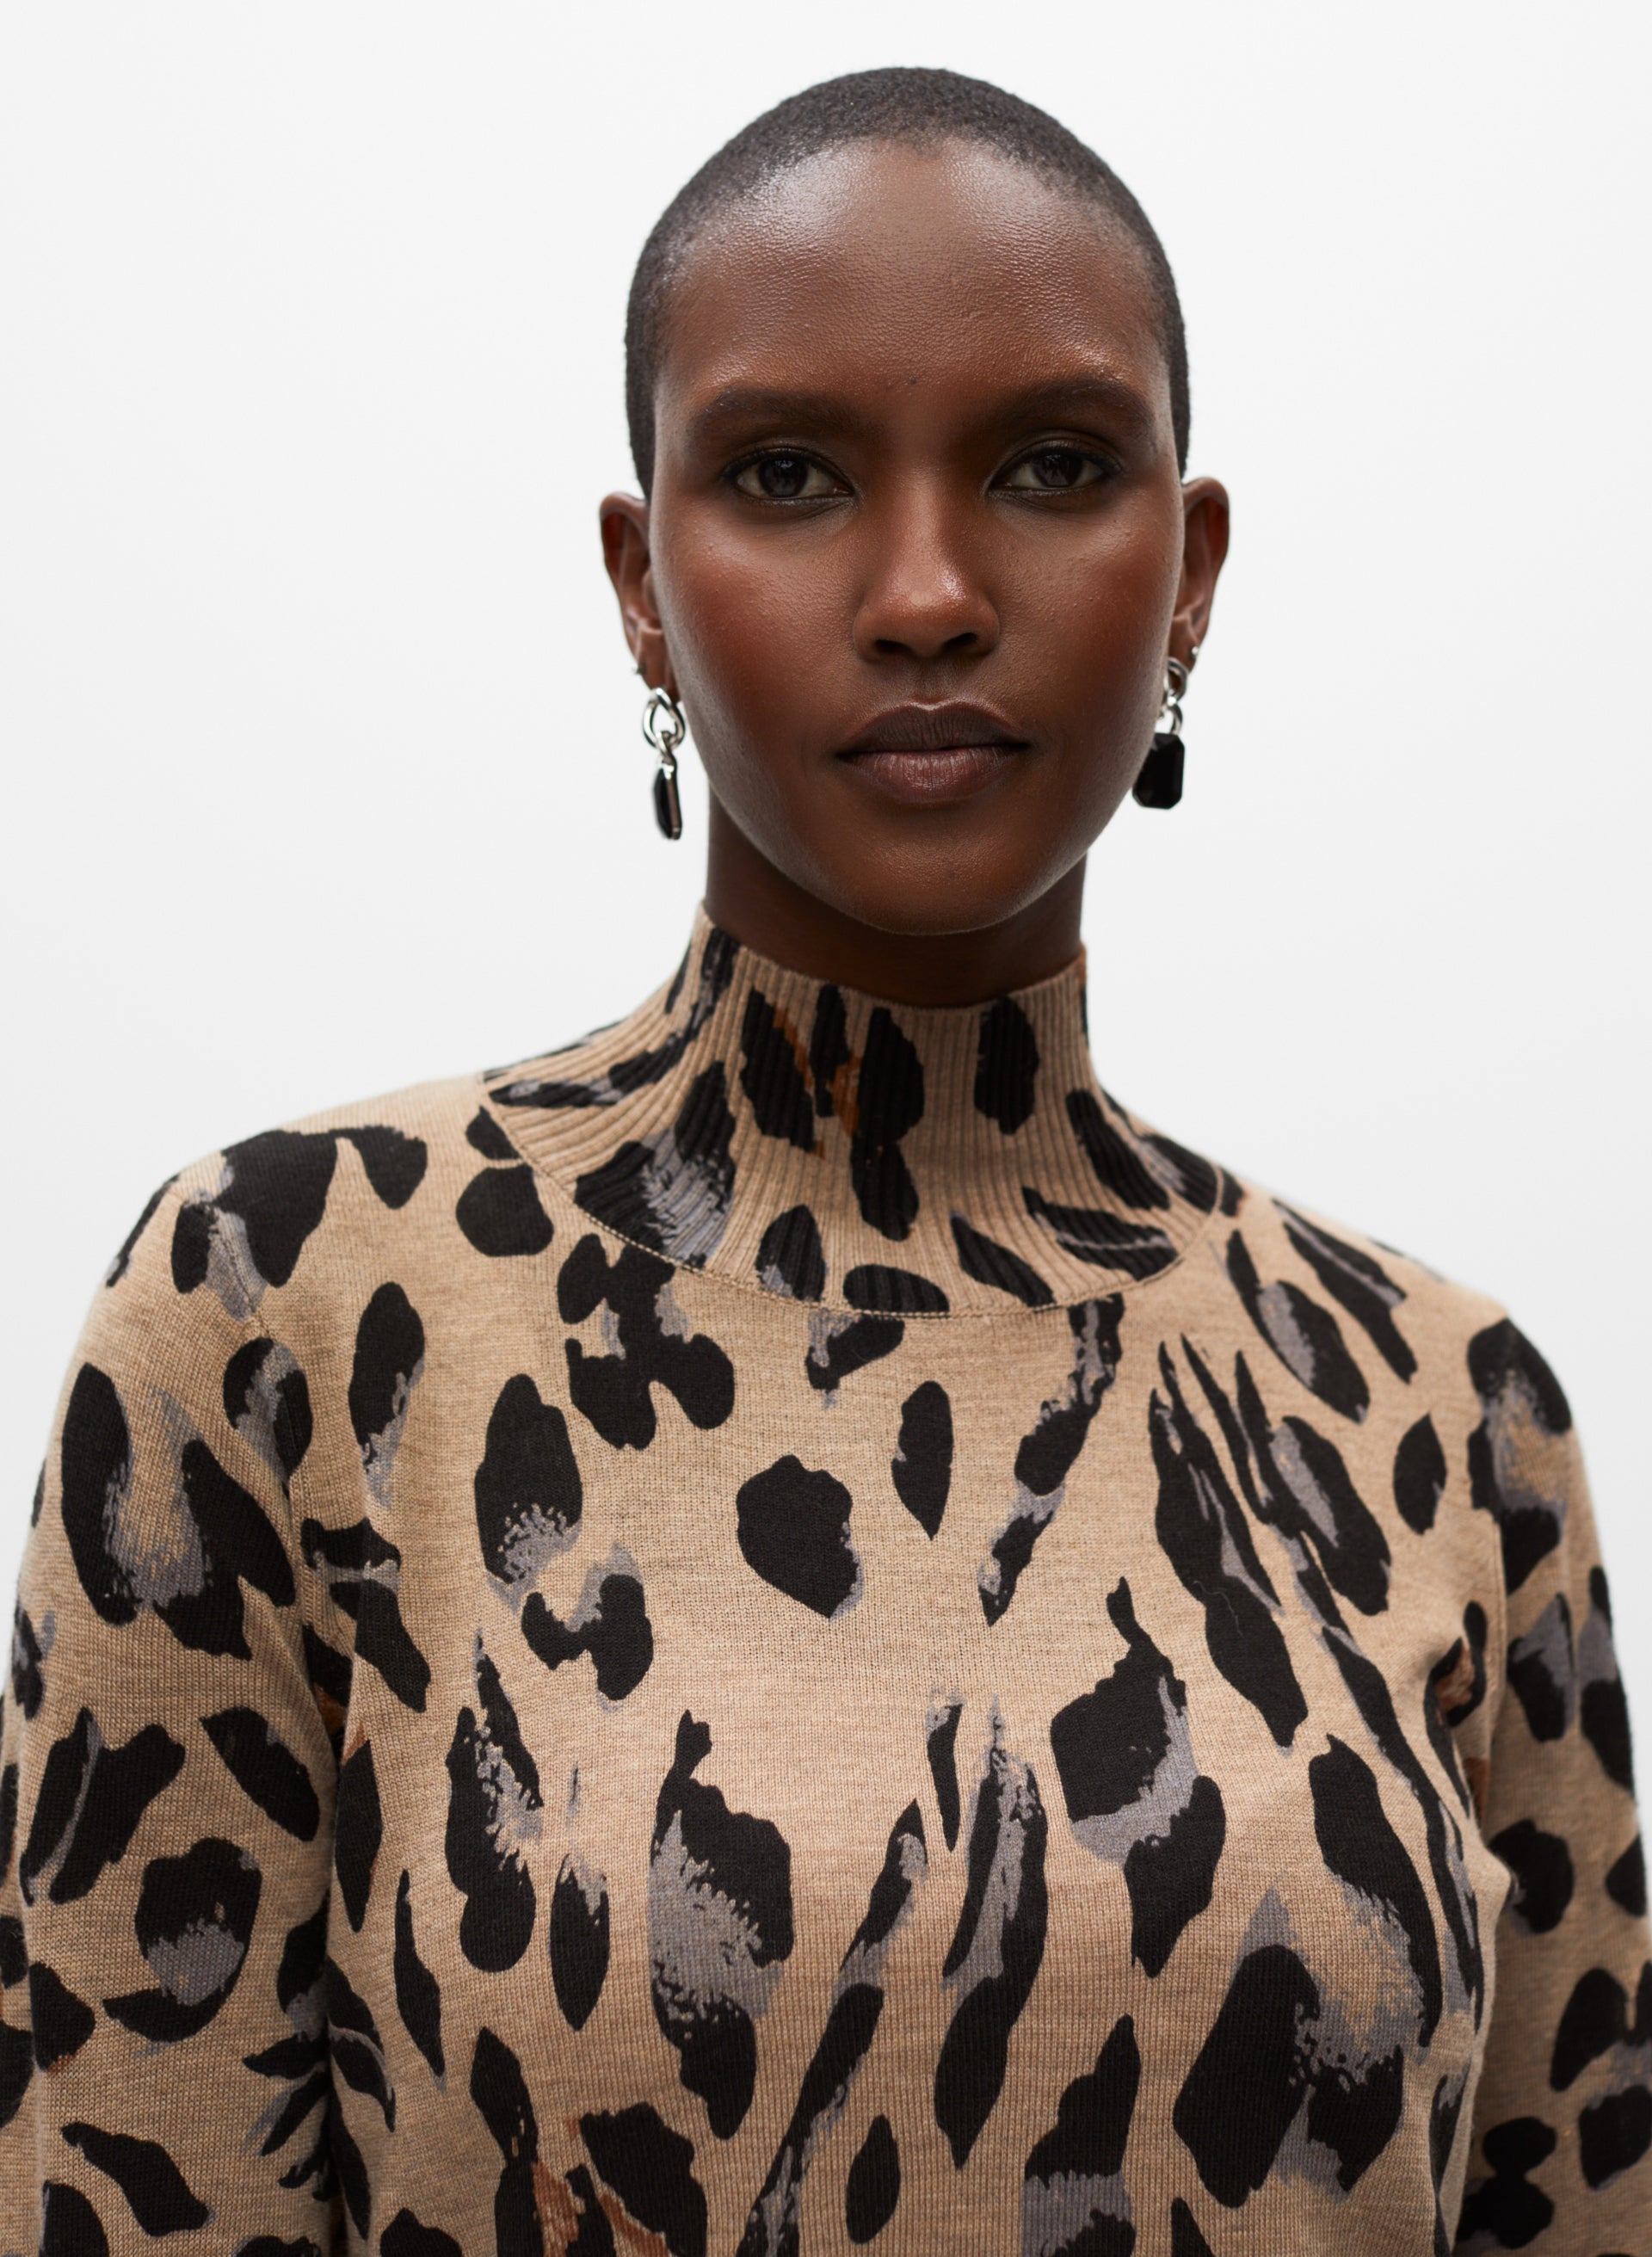 Leopard Print Tunic